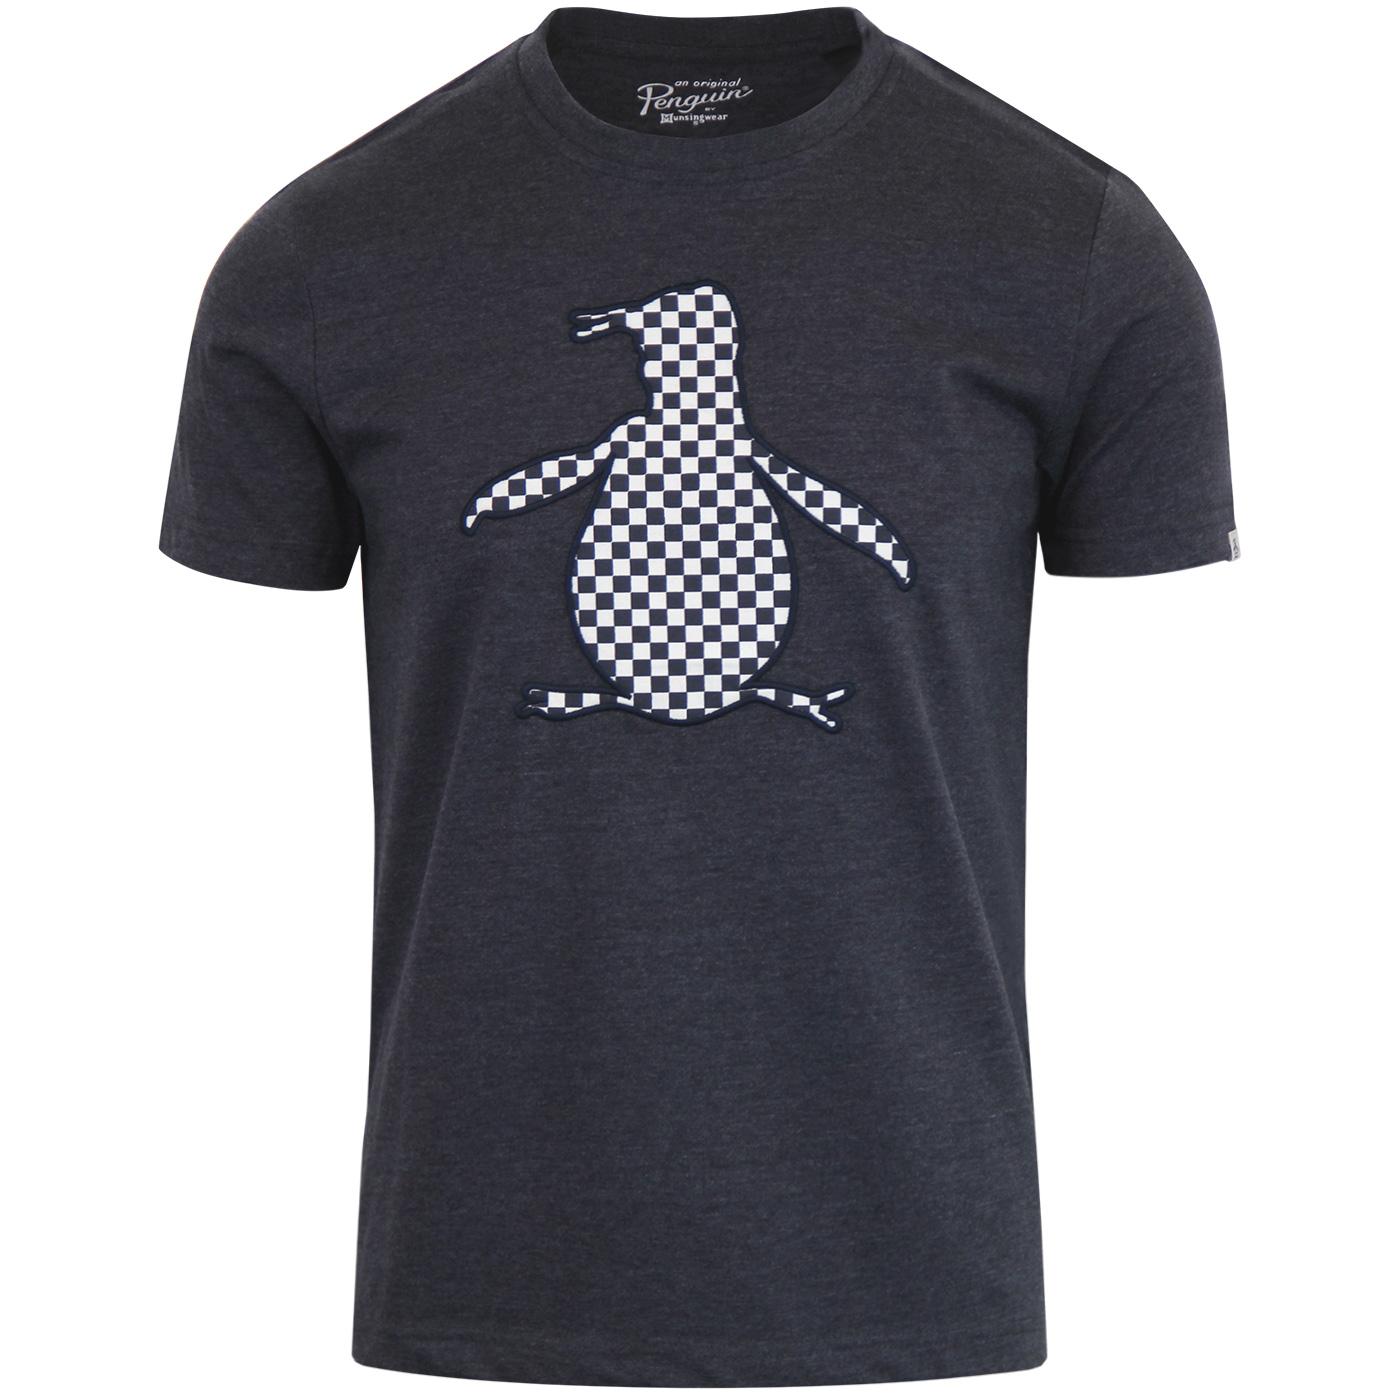 Ska Pete ORIGINAL PENGUIN Mod Checkerboard T-shirt